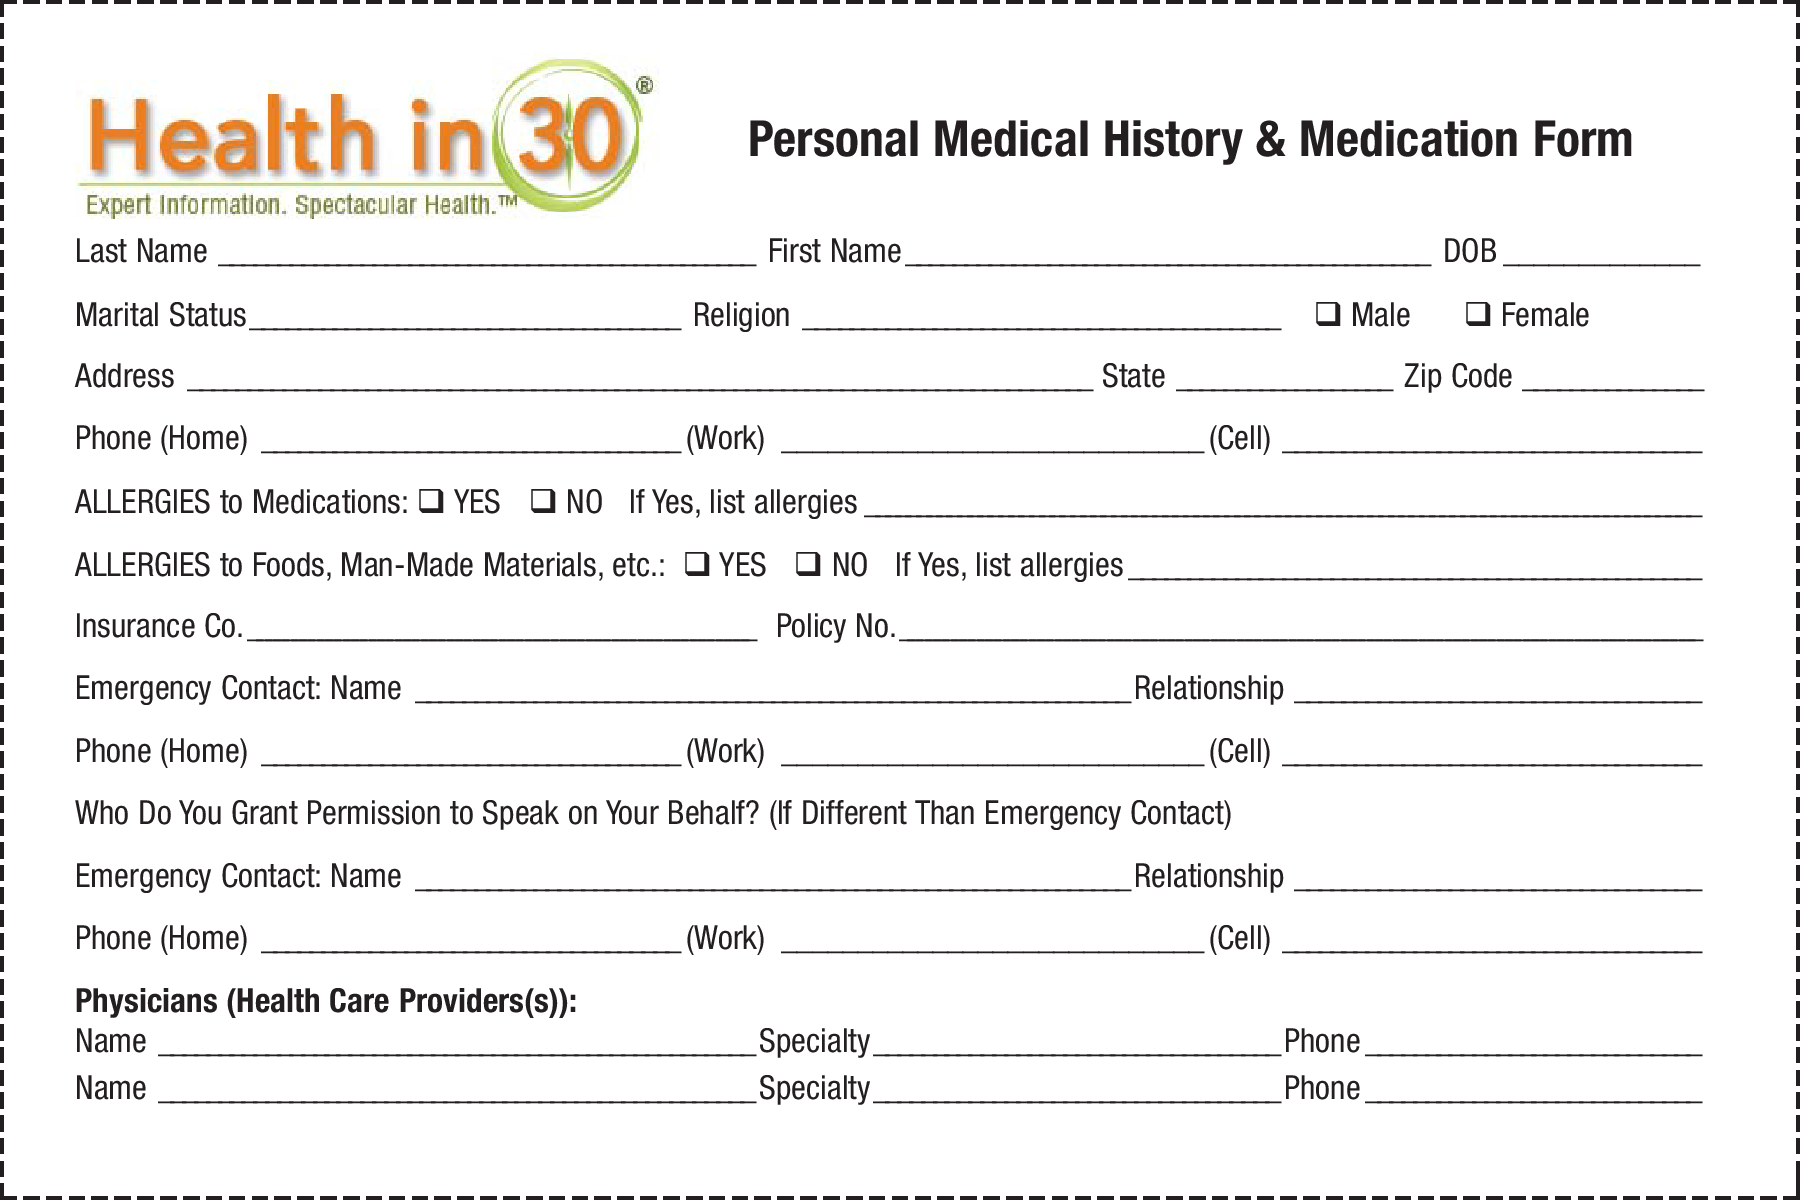 Personal Medical History Form main image